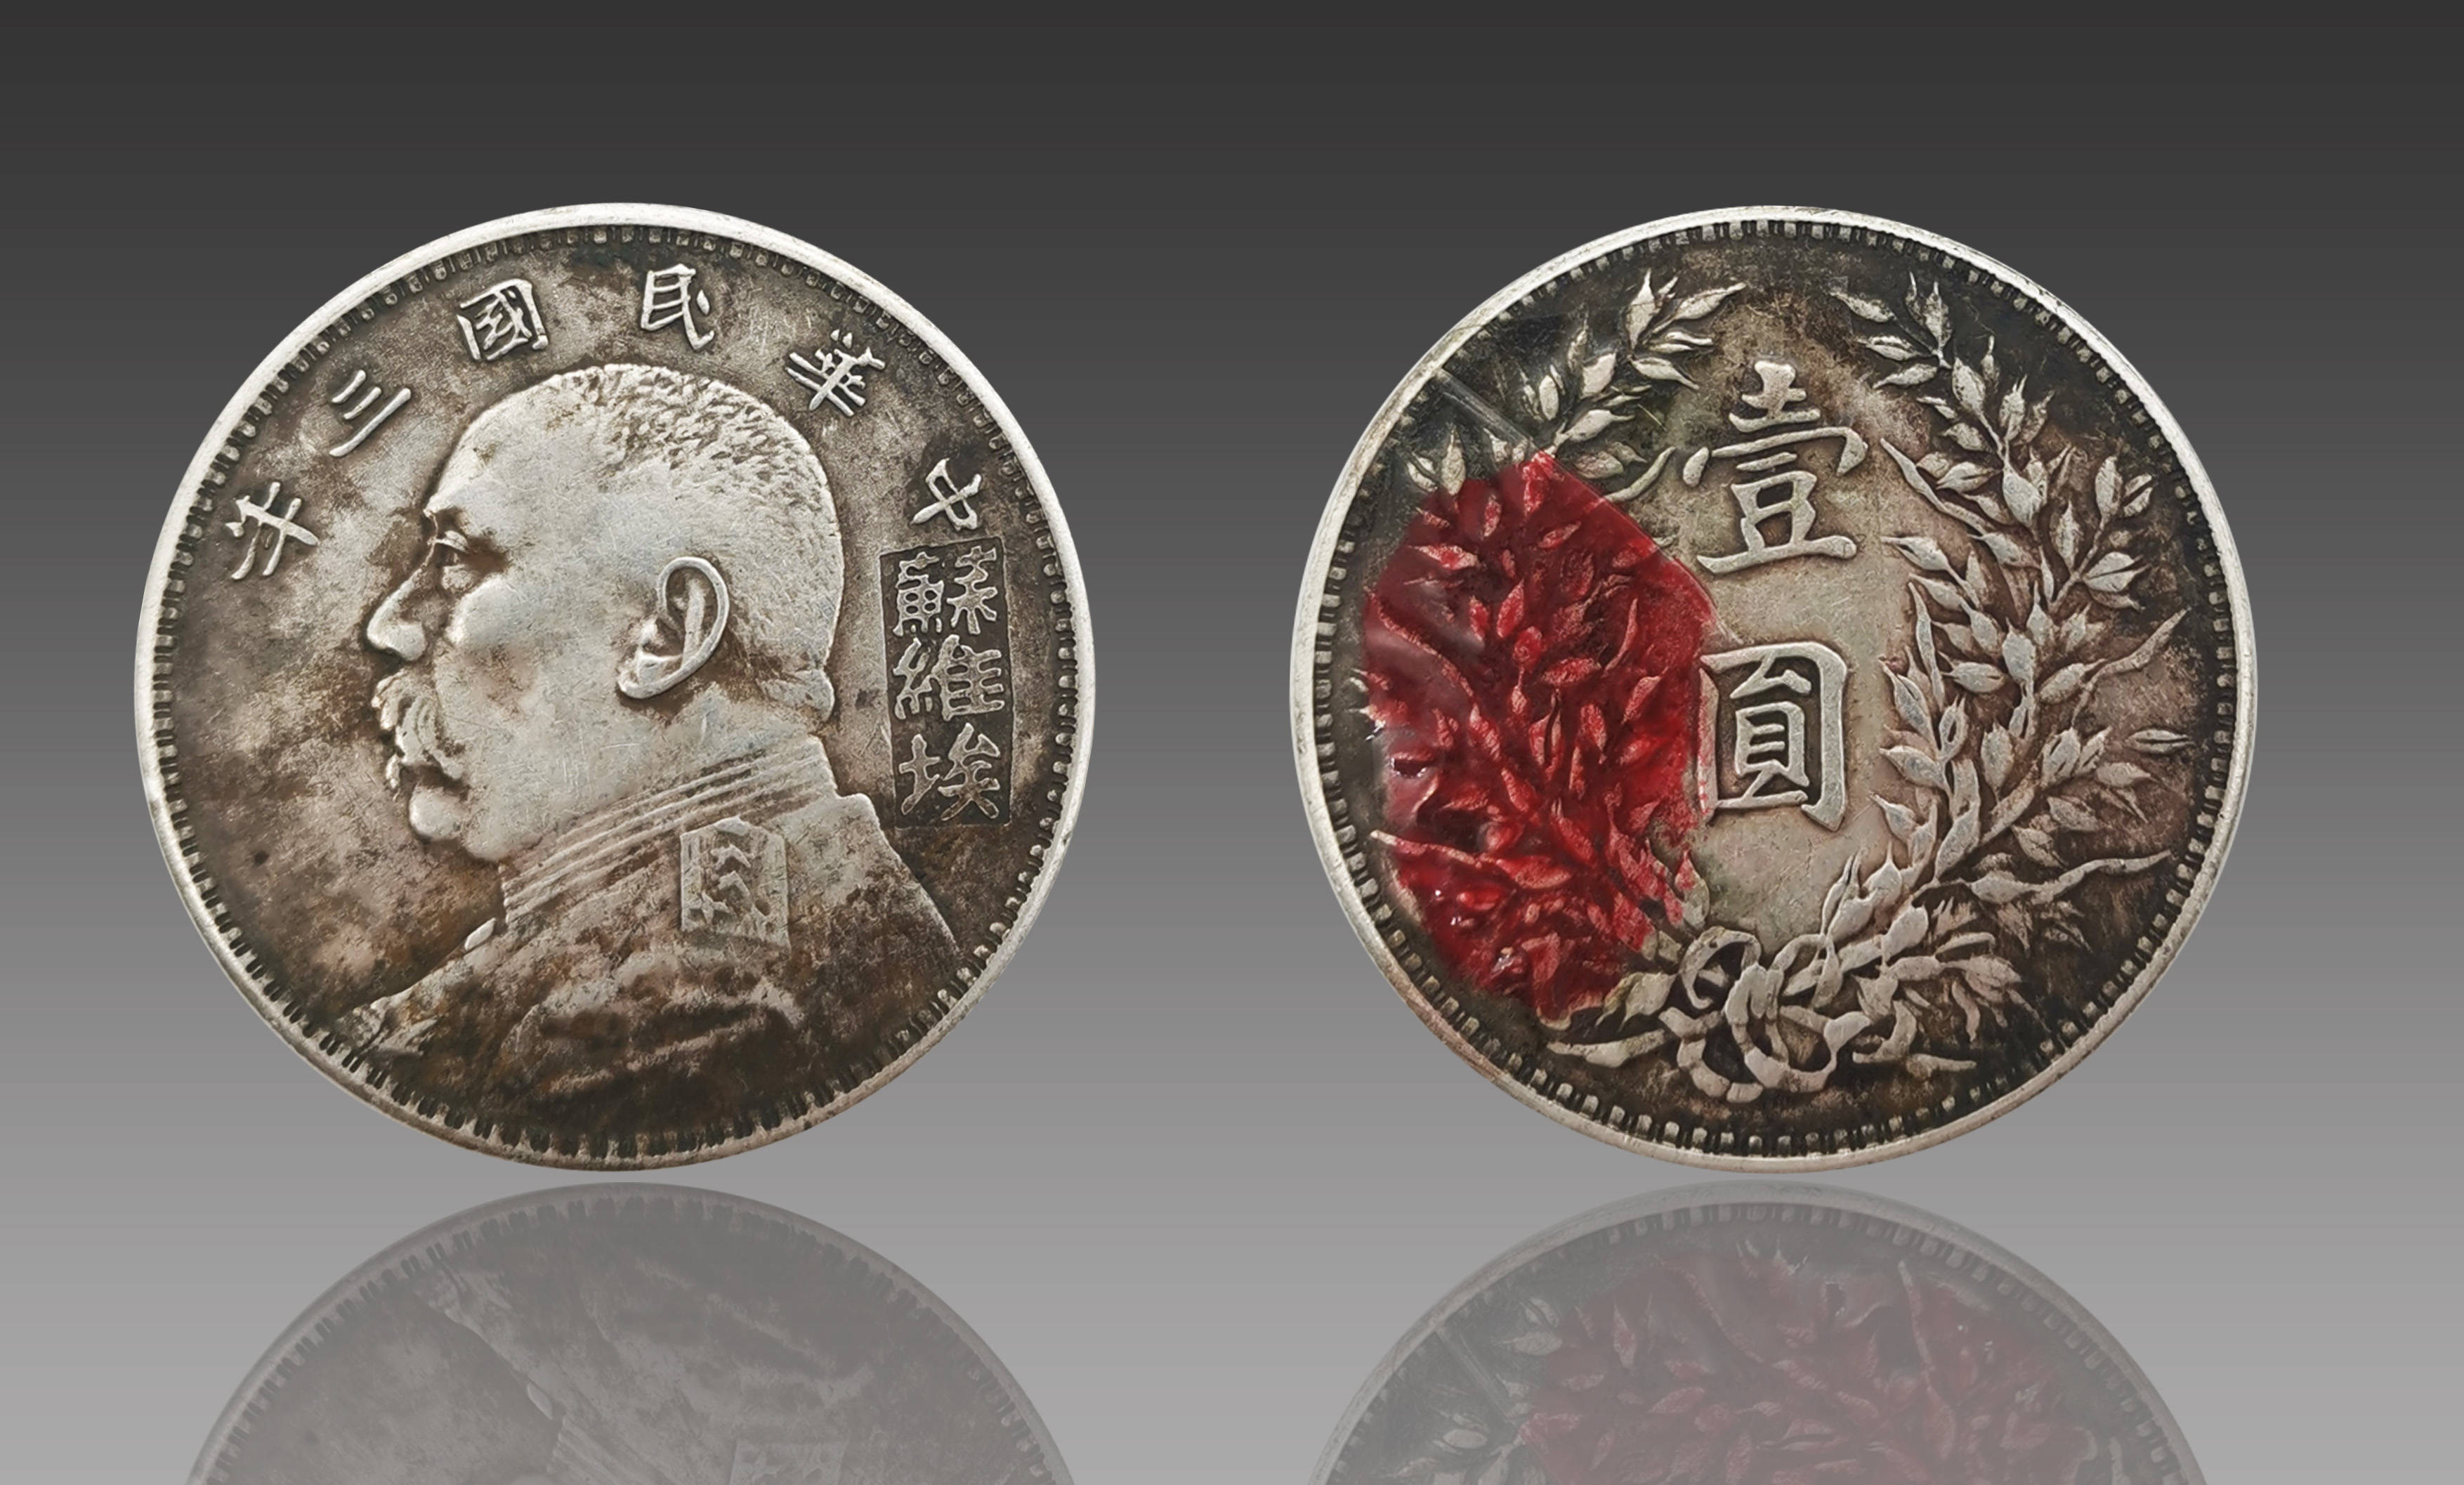 袁世凱壹圓銀貨 NGC AU DETAILS (HARSHLY CLEANED) 旧貨幣/金貨/銀貨